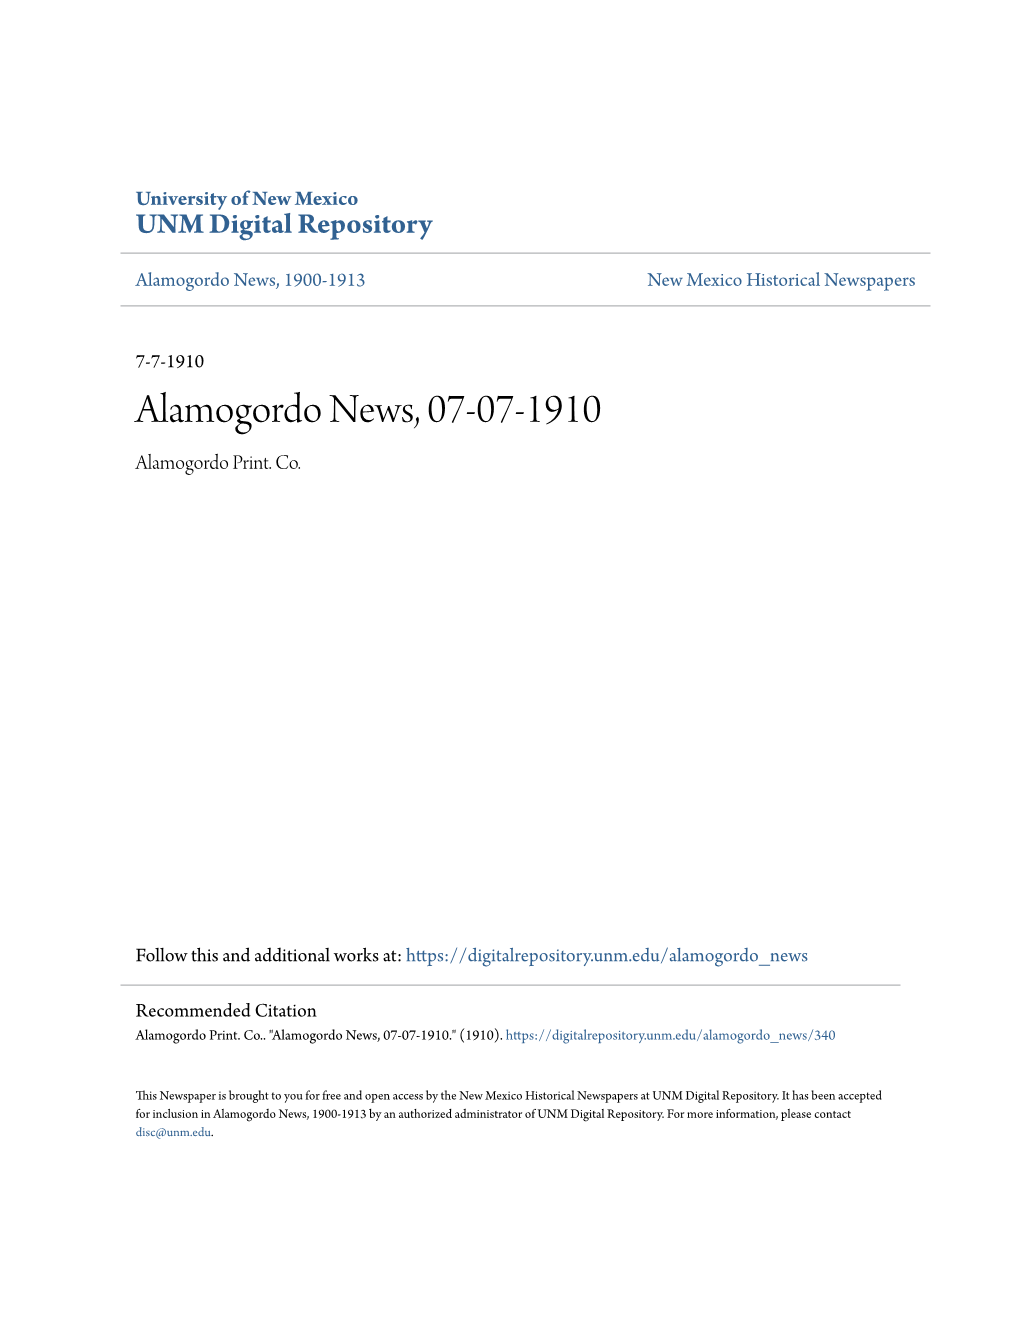 Alamogordo News, 07-07-1910 Alamogordo Print